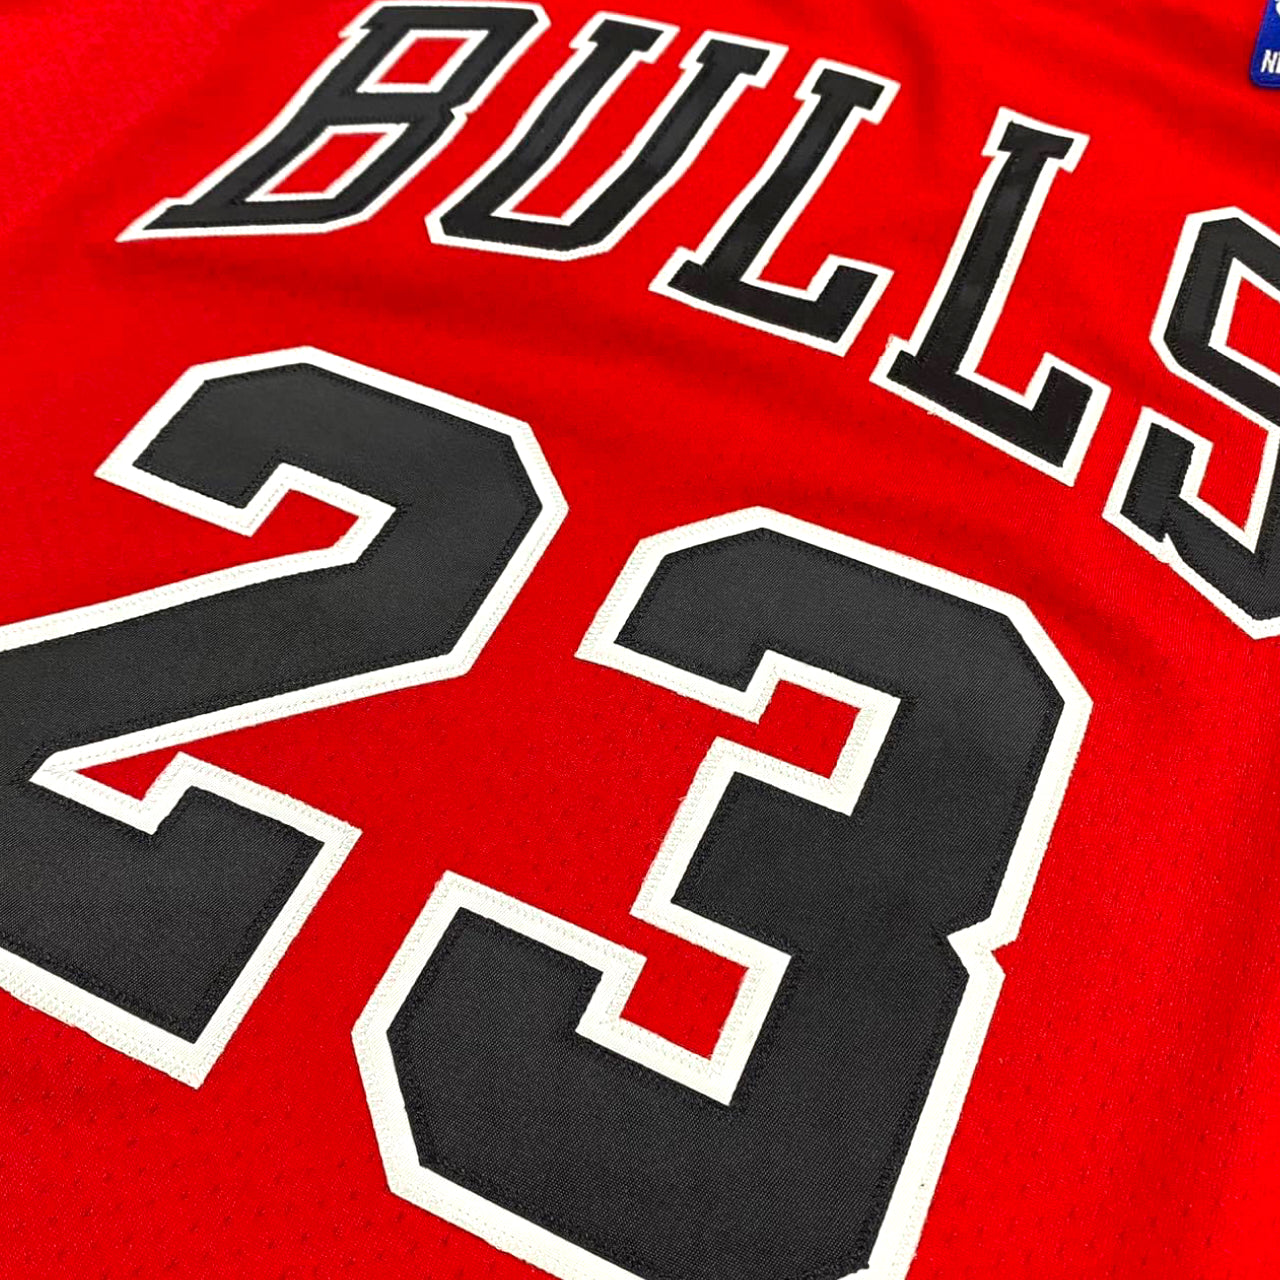 Mitchell & Ness Michael Jordan 95-96 Chicago Bulls 23 "NBA Final" Away Authentic Jersey - Red - Hoop Jersey Store